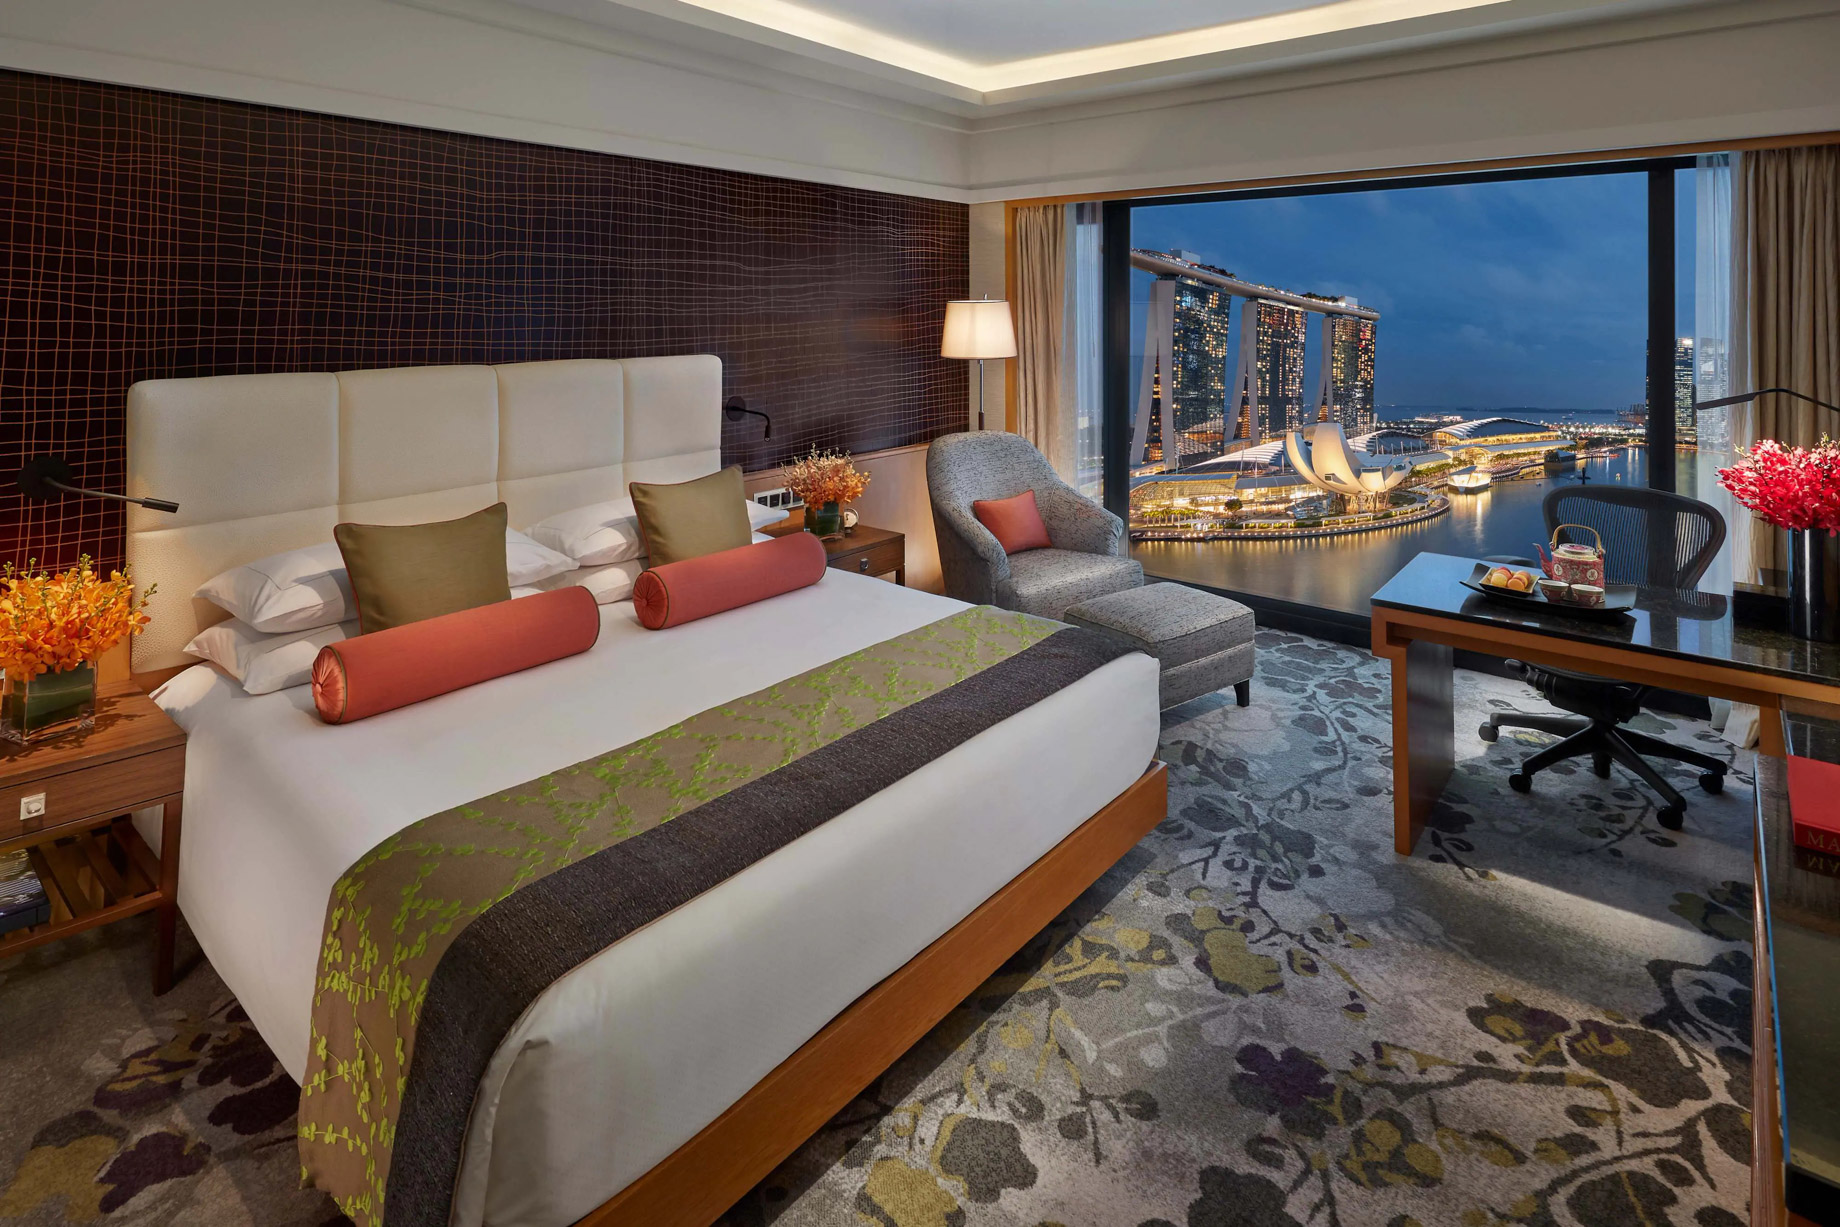 Mandarin Oriental, Singapore Hotel – Singapore – Club Marina Bay View Room